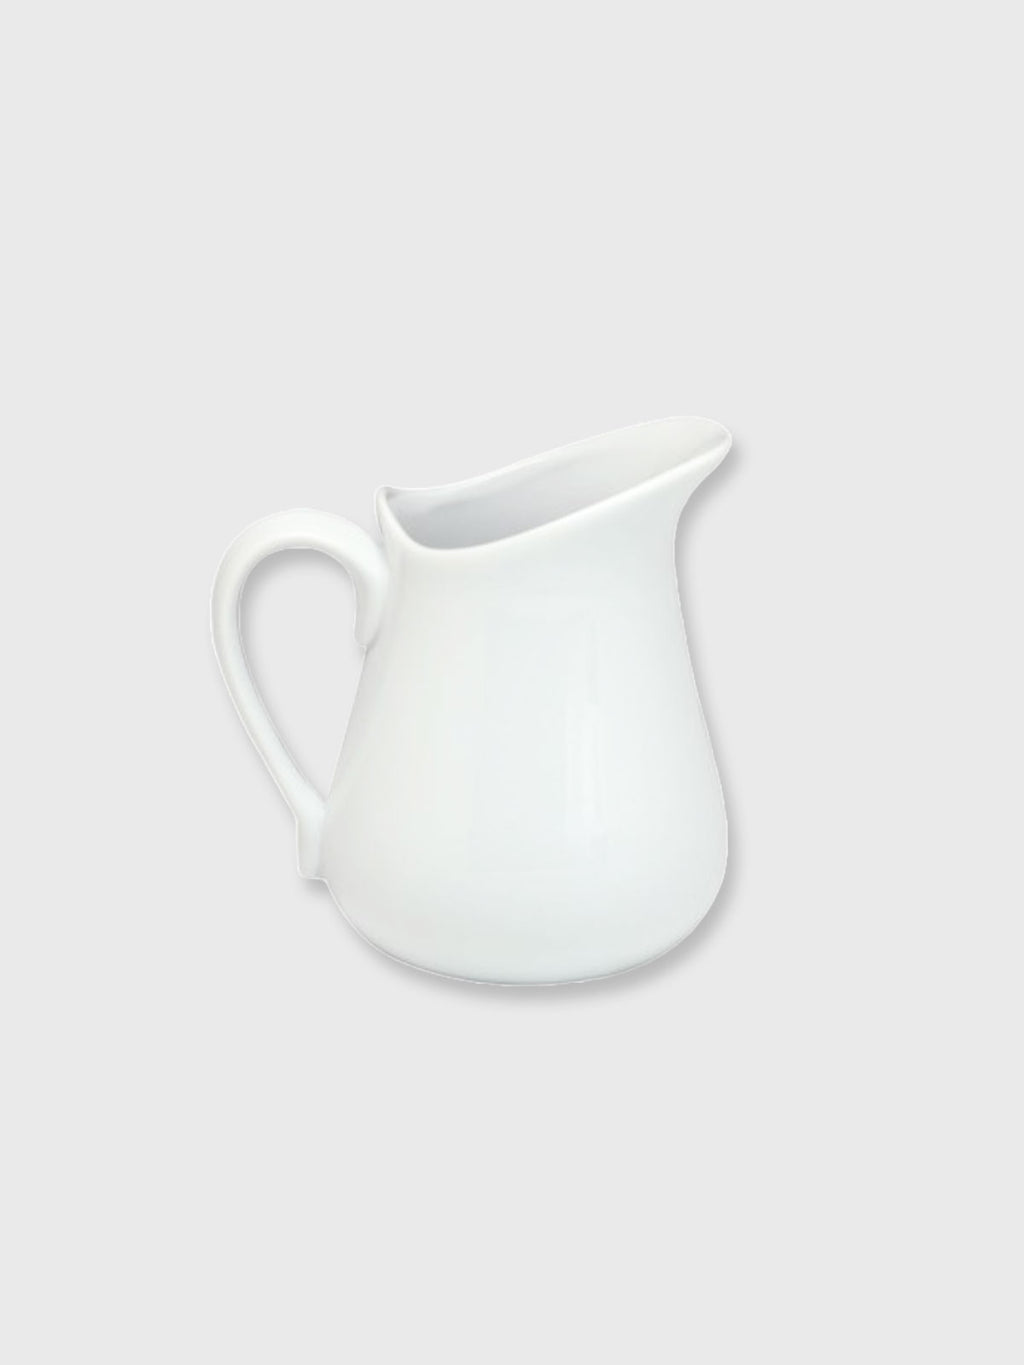 Fine Porcelain White Jug - 0.25 litres